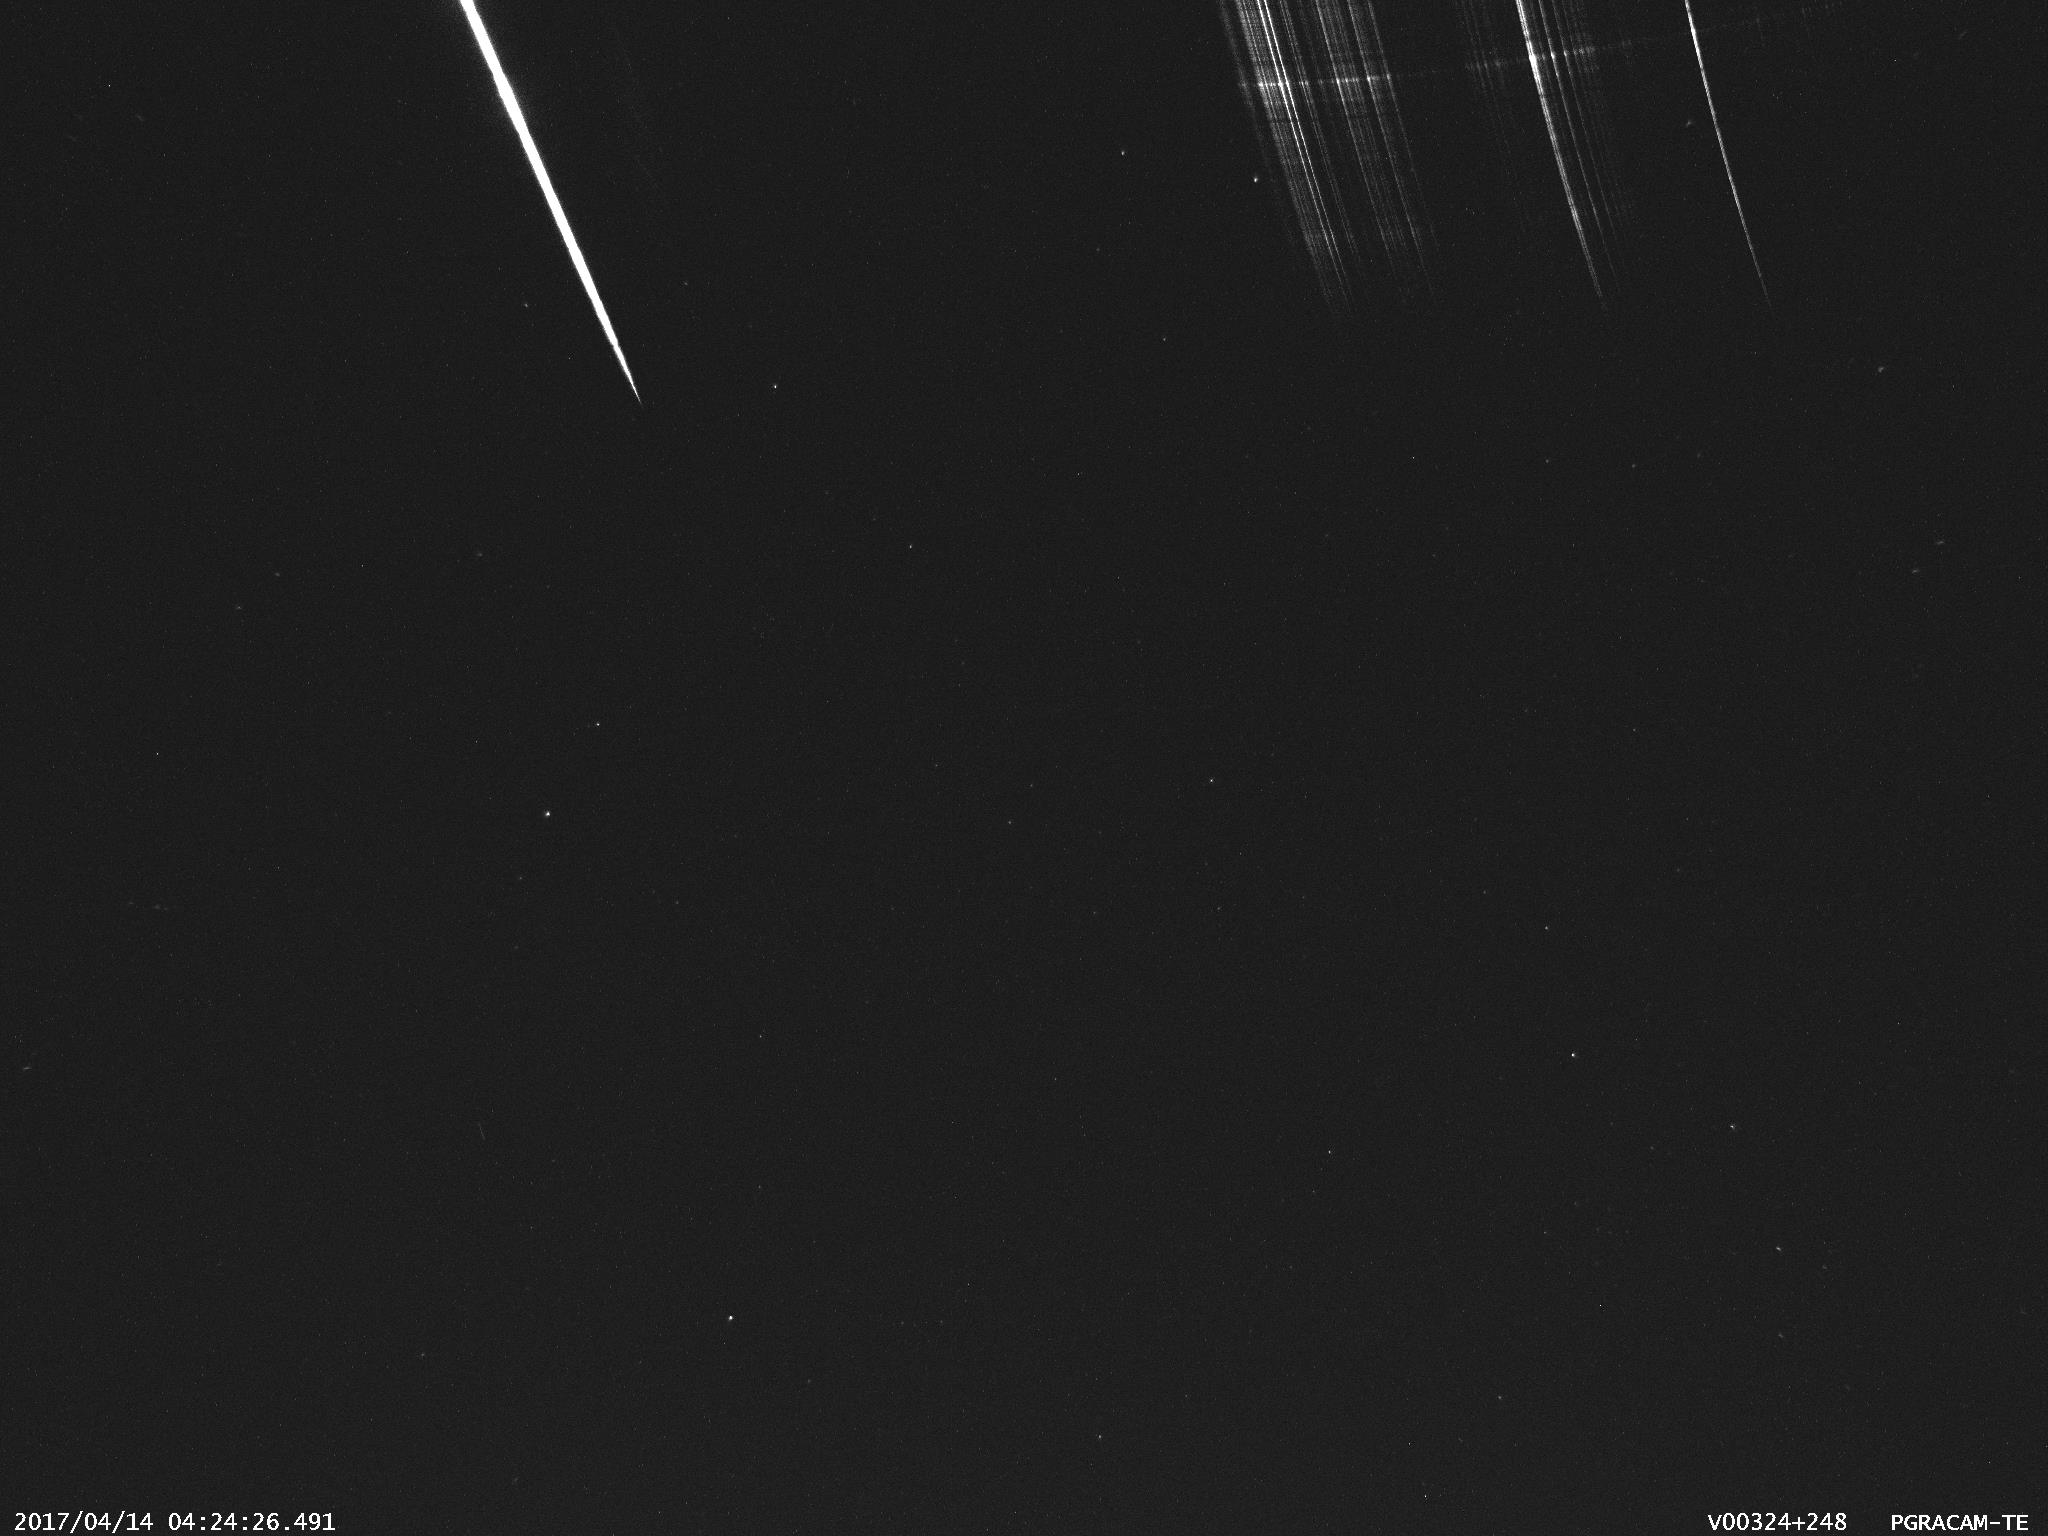 Obr. 15: Spektrum jasného meteoru 20170414_042426, spektrograf PGRACAM-TE. Autor: Hvězdárna Valašské Meziříčí